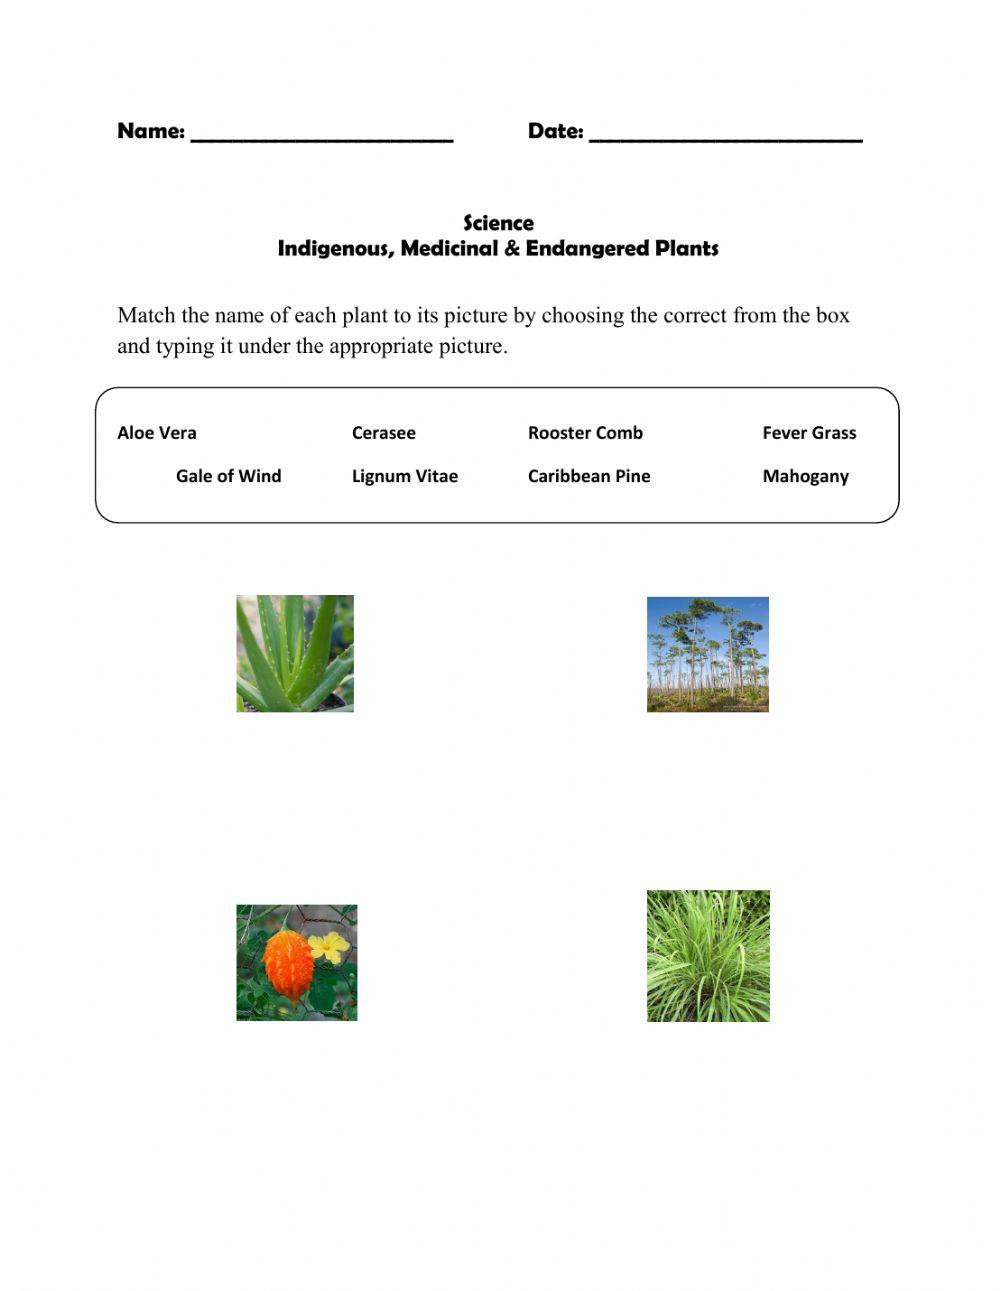 Indigenous and Medicinal Plants